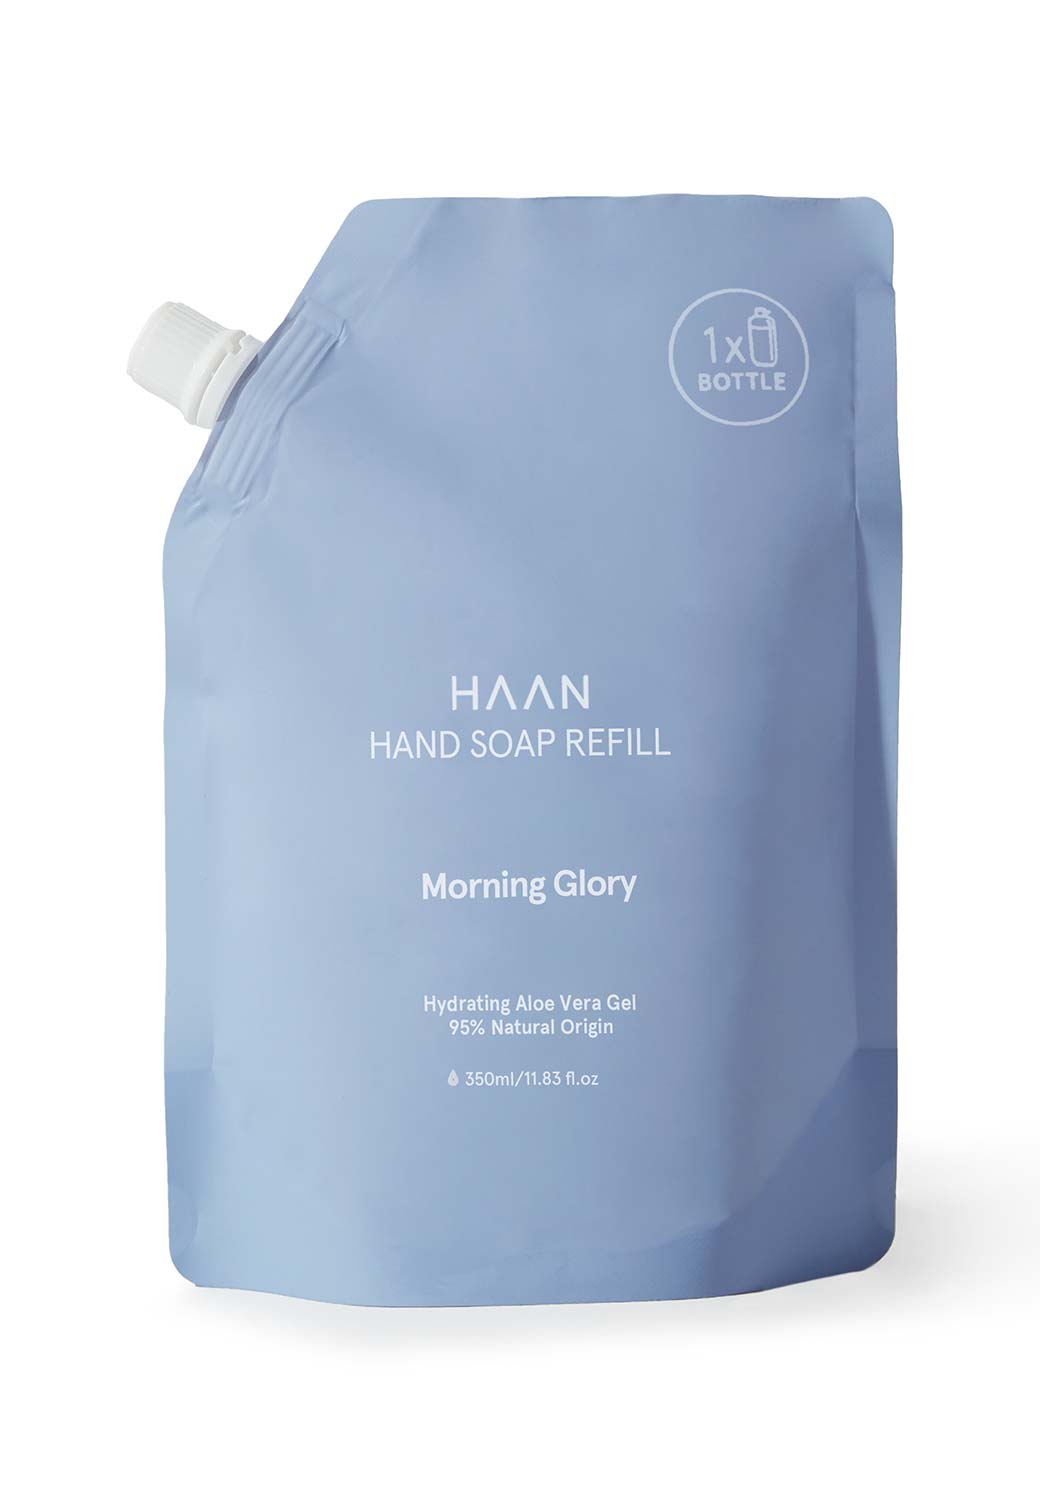 Dark Gray אריזת מילוי | סבון ידיים Morning Glory (₪15.68 ל-100 מ"ל) HAAN